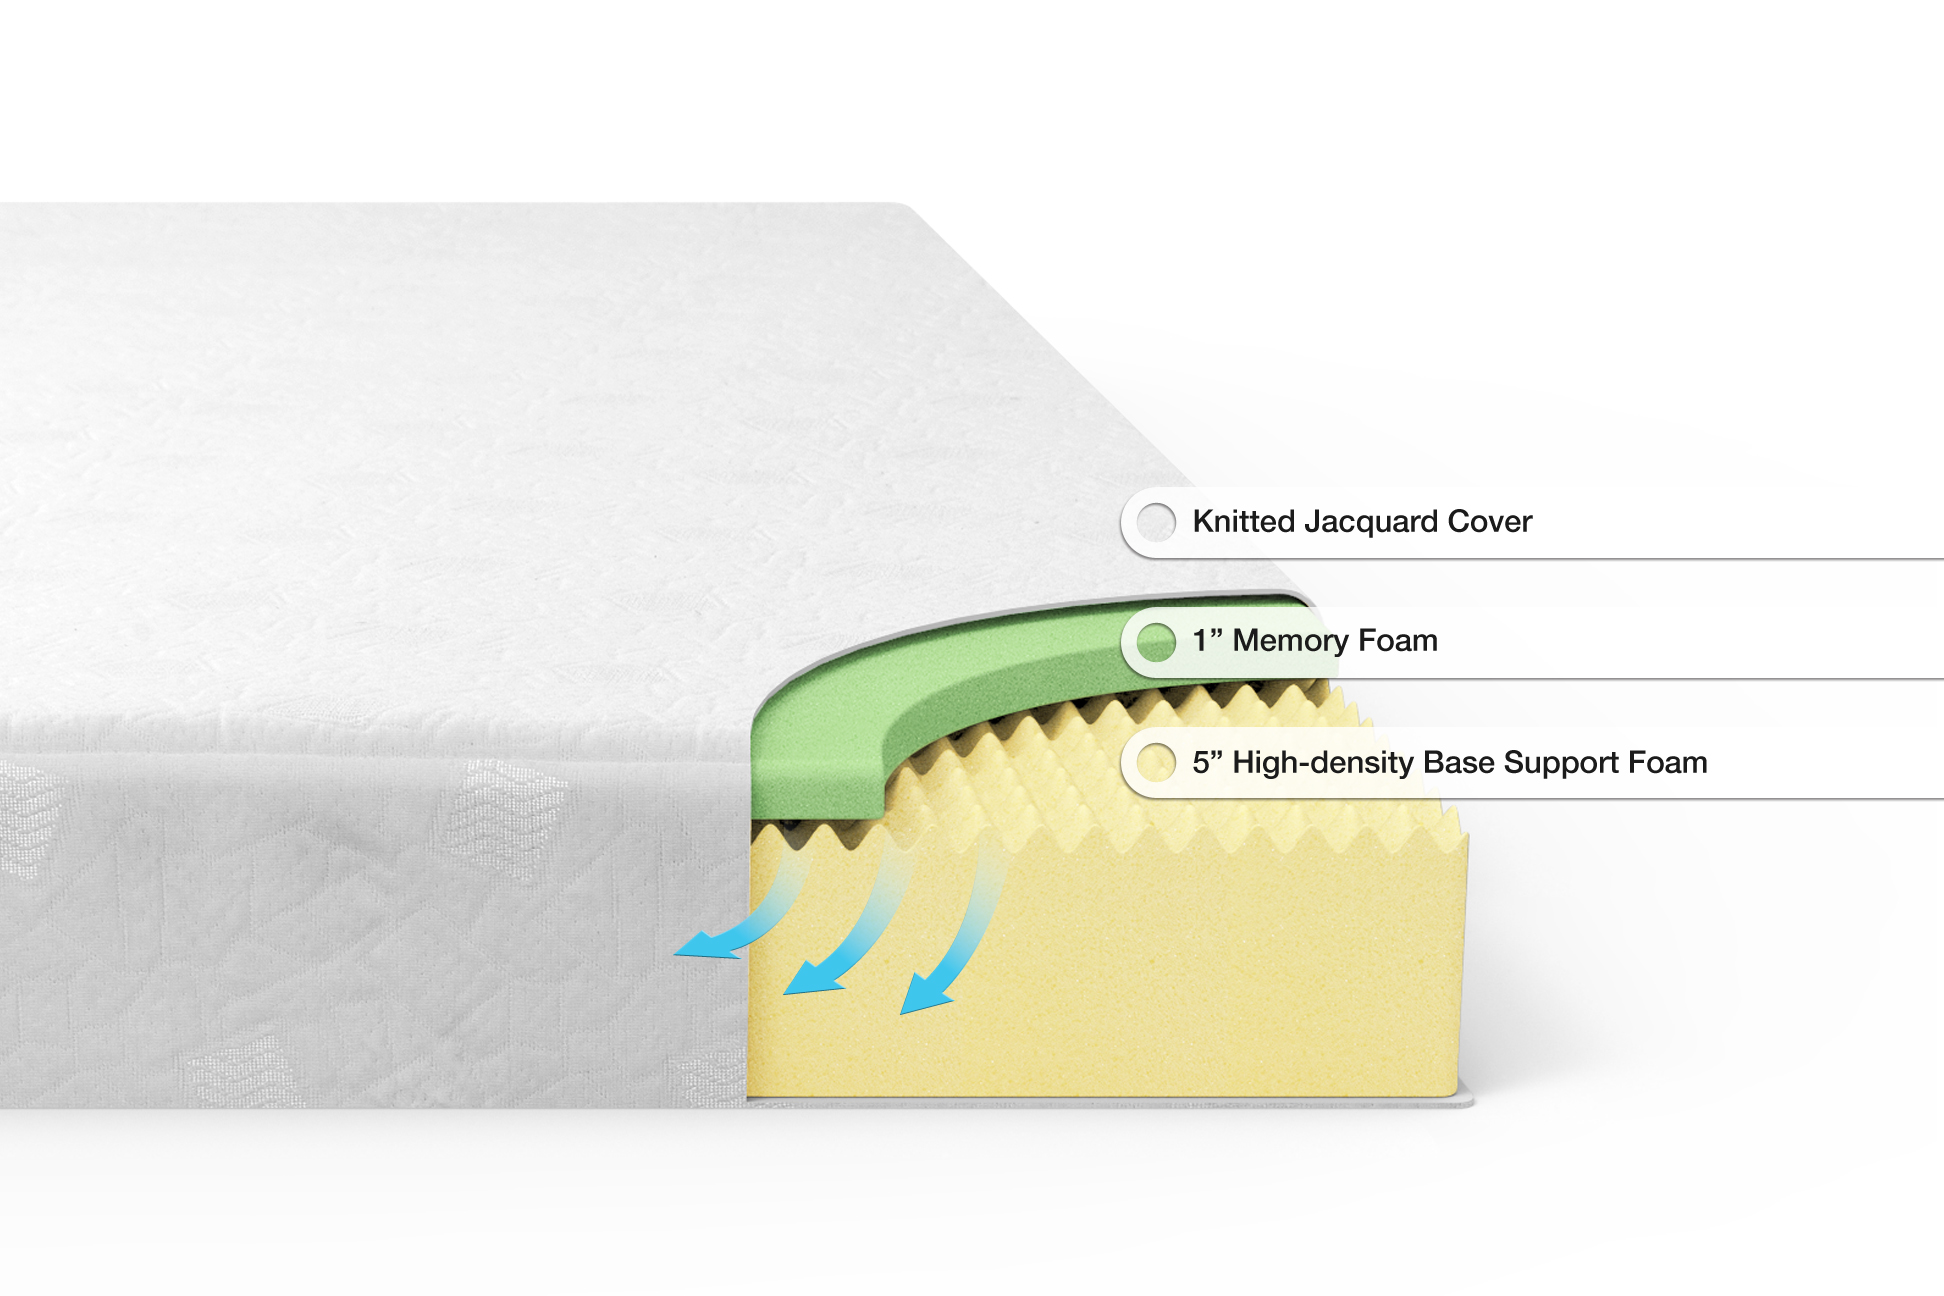 spa sensations 12 theratouch memory foam mattress full